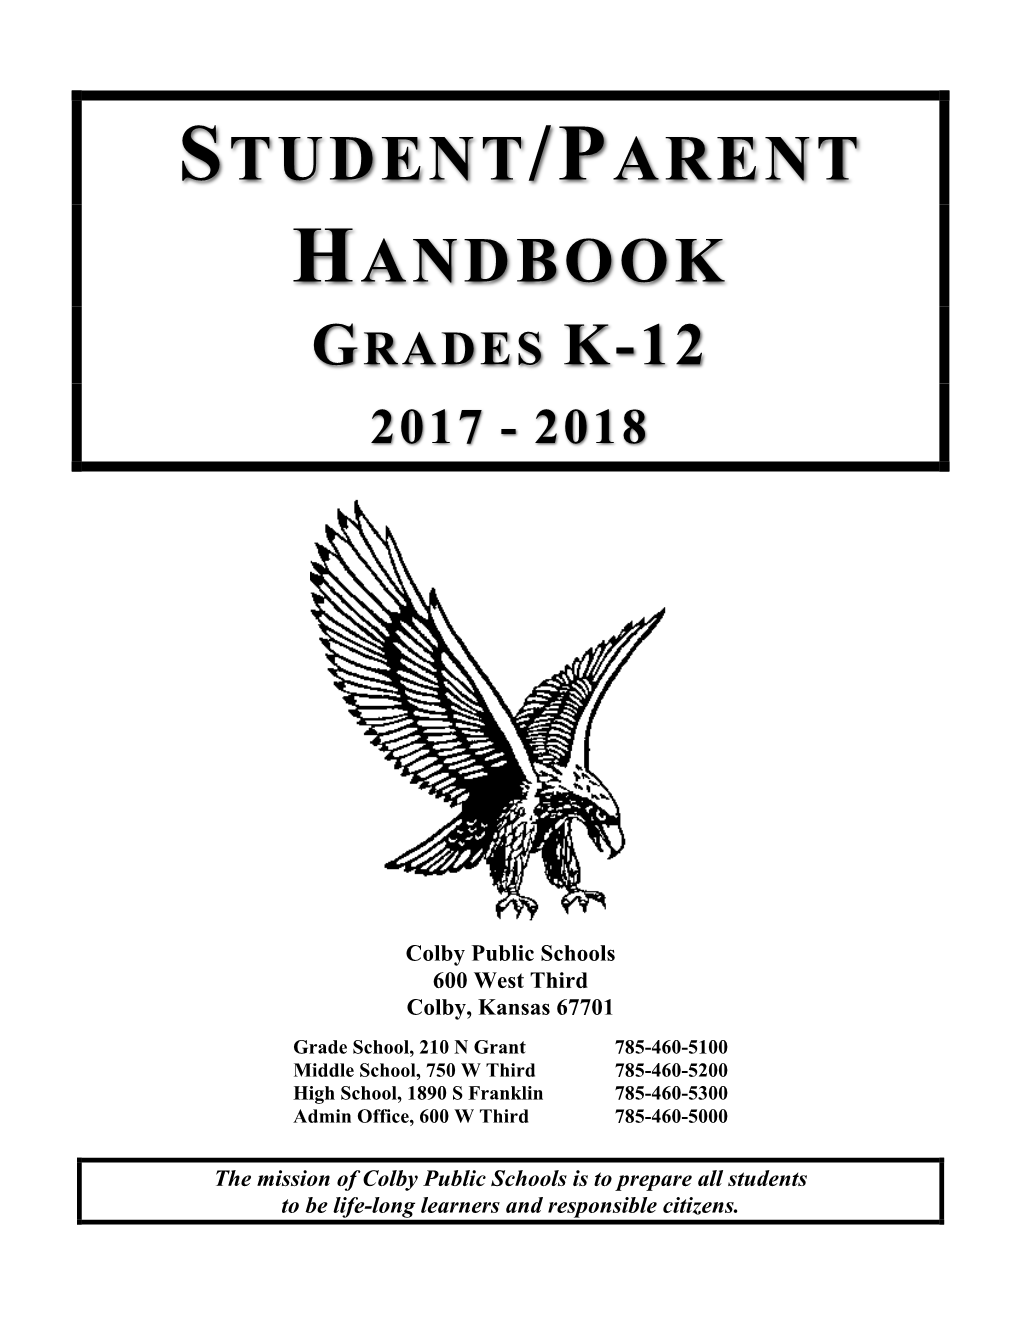 Student/Parent Handbook Grades K-12